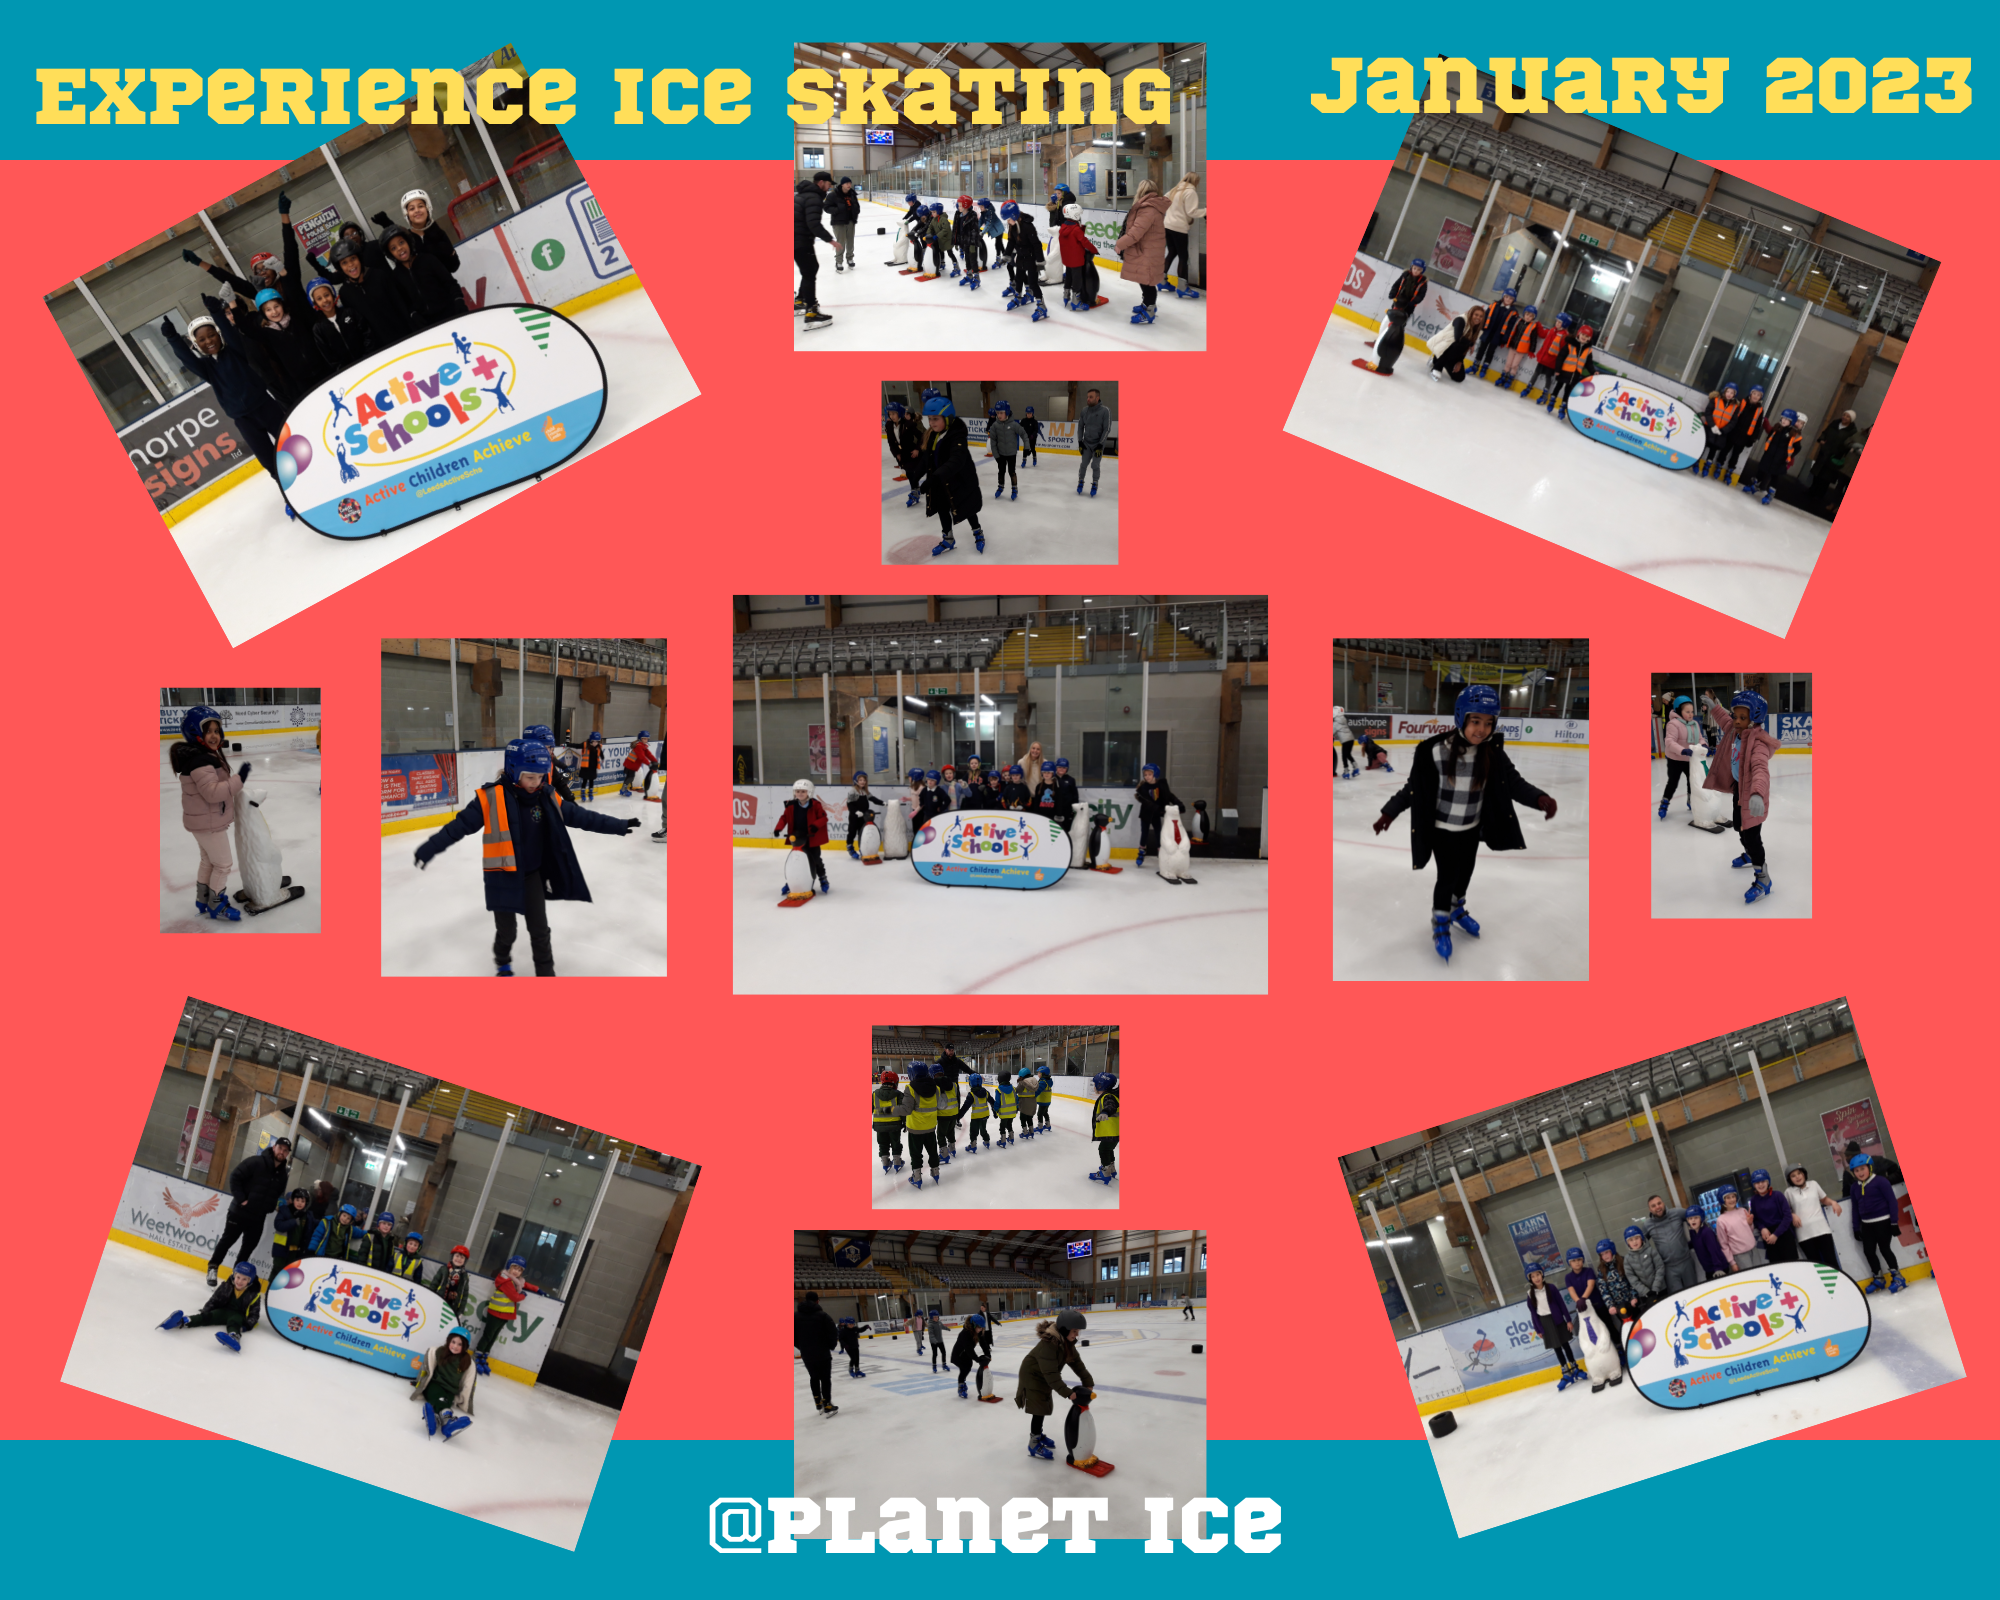 Ice skating event